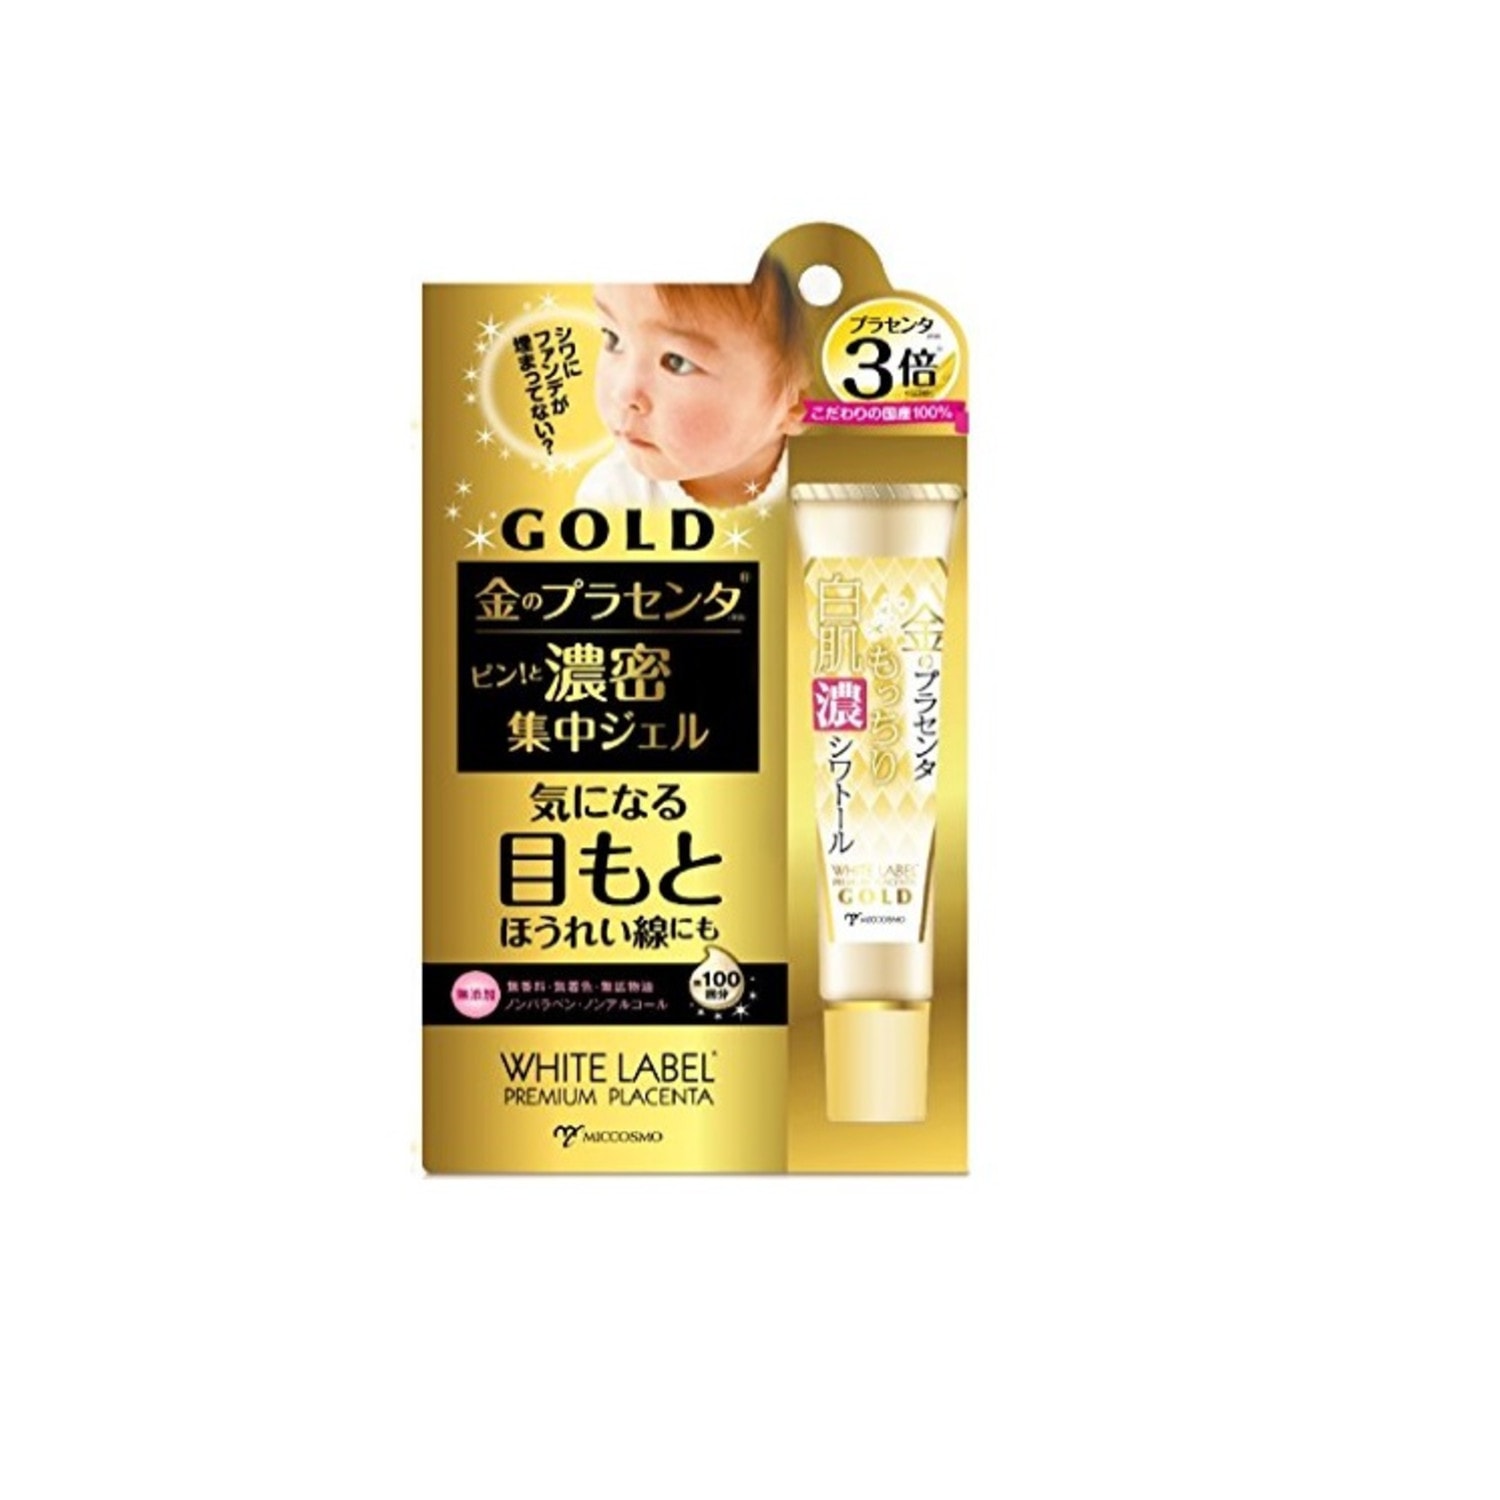 MiCCOSMO  Premium Placenta Gold Rich Eye Gel Гель для кожи вокруг глаз с плацентой, 30г. / 626407 (3Т)